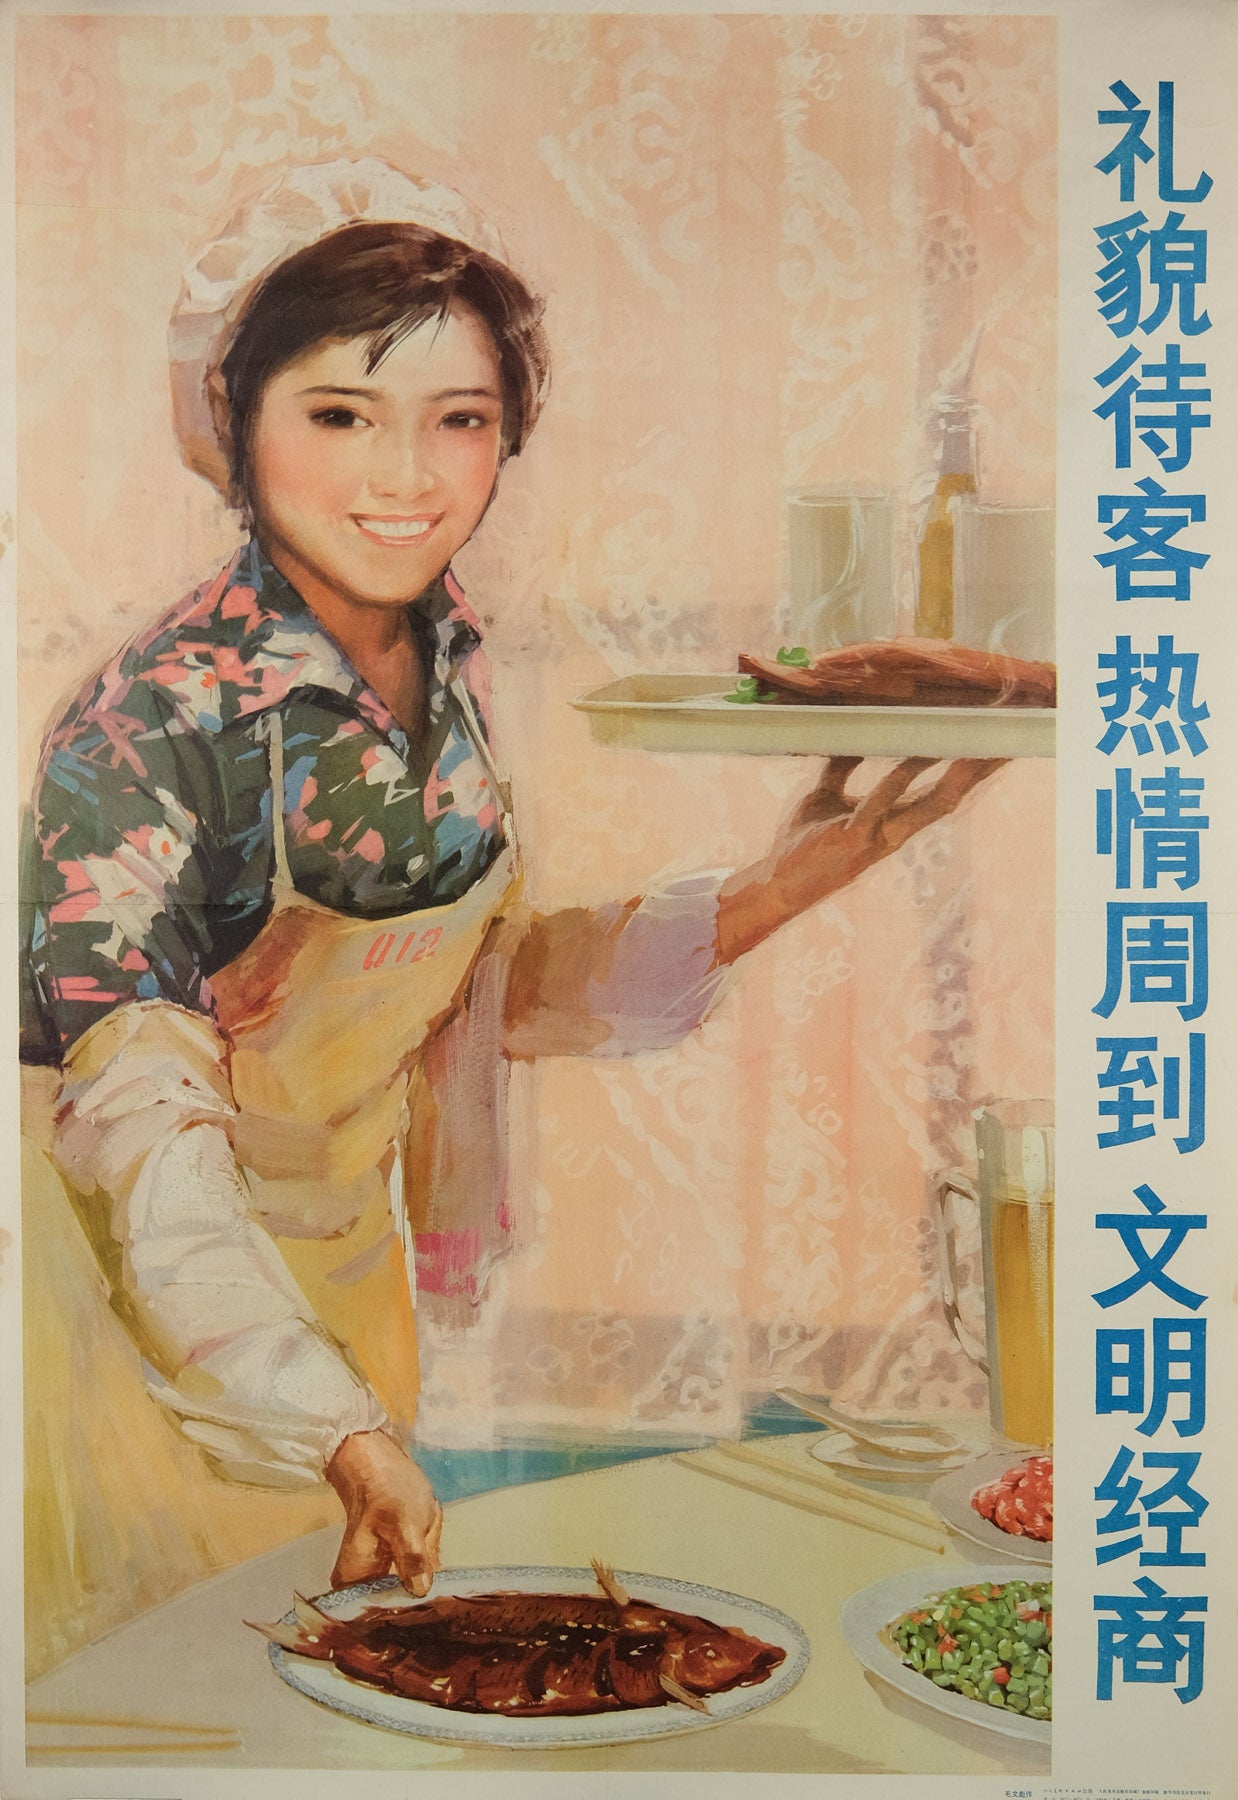 original vintage 1983 Chinese communist propaganda poster Treat customers politely by Mao Wenbiao